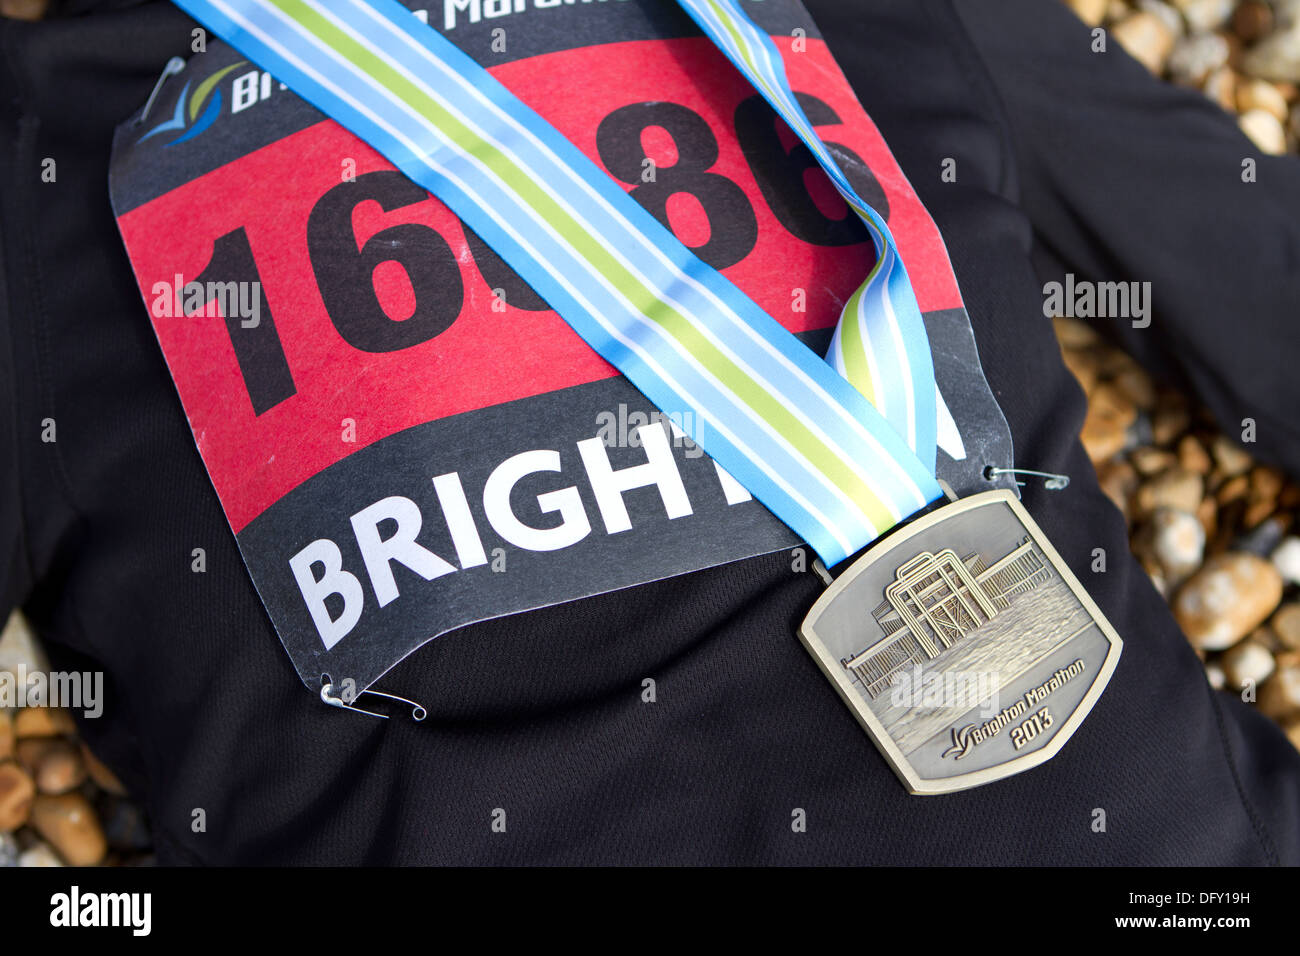 Brighton Marathon race number bib and finisher's medal. Stock Photo